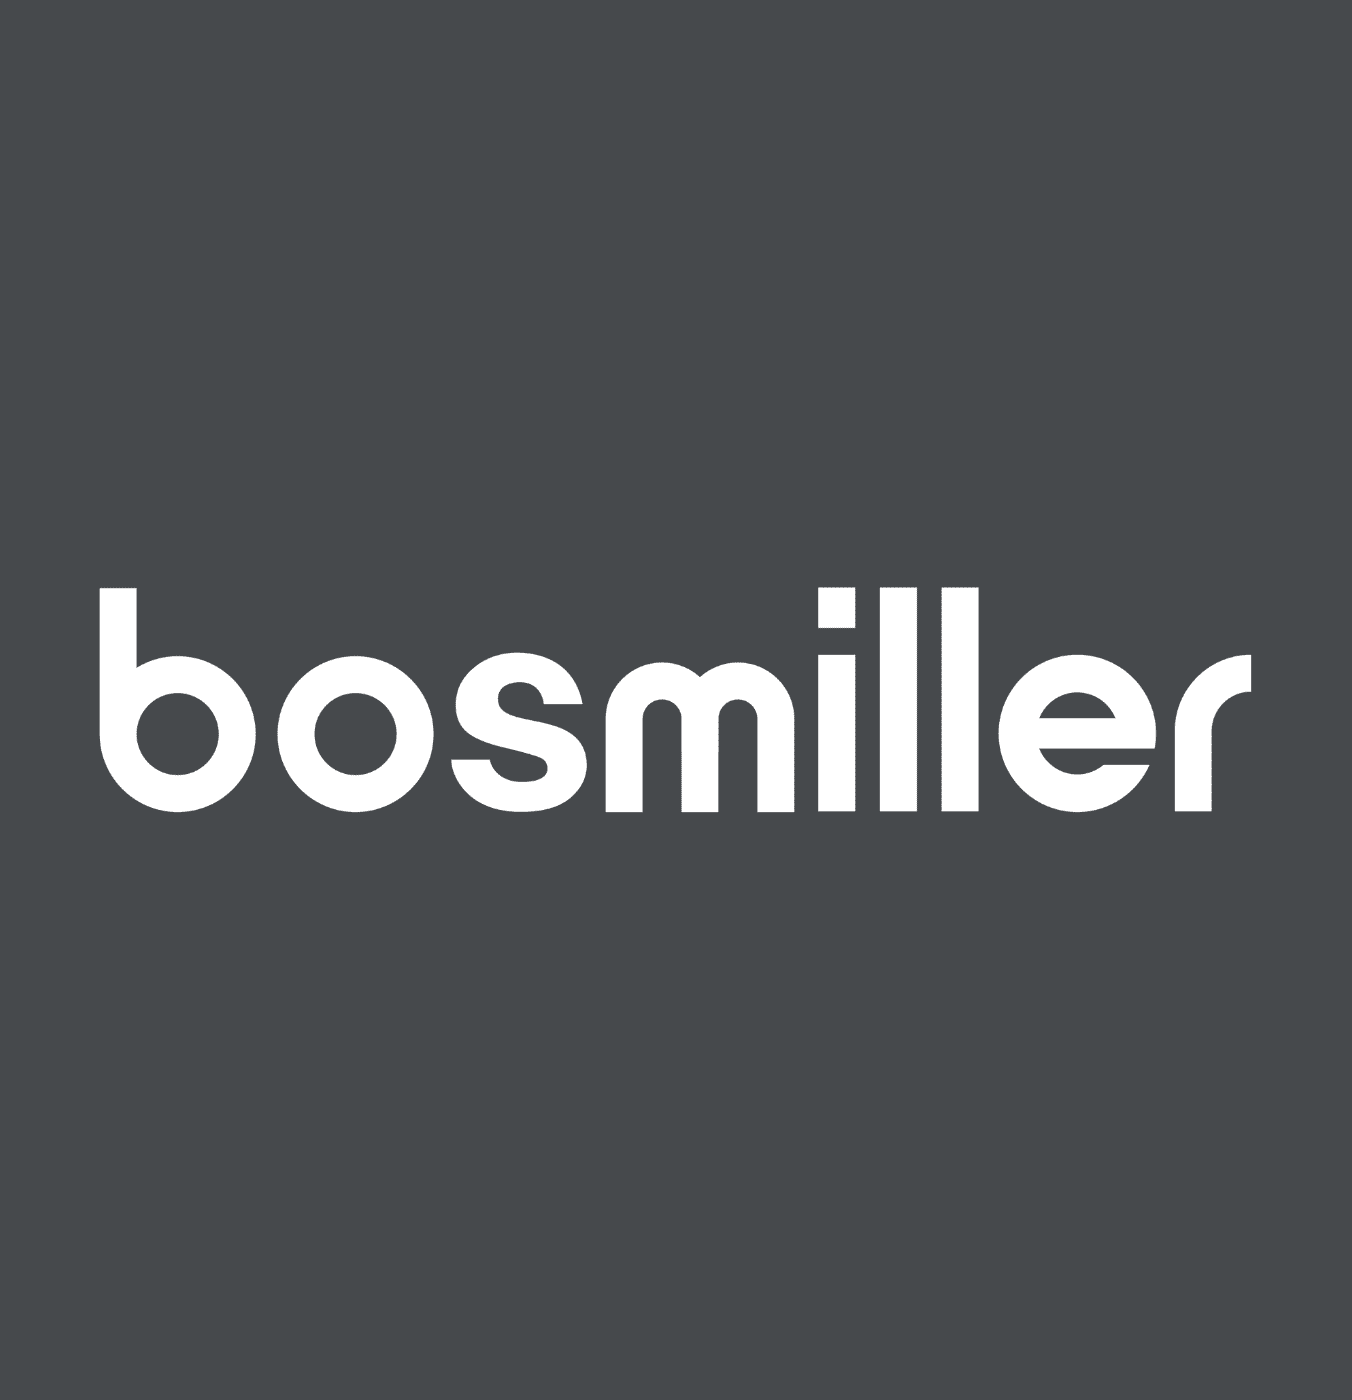 2019 Events M Banner - Bosmiller